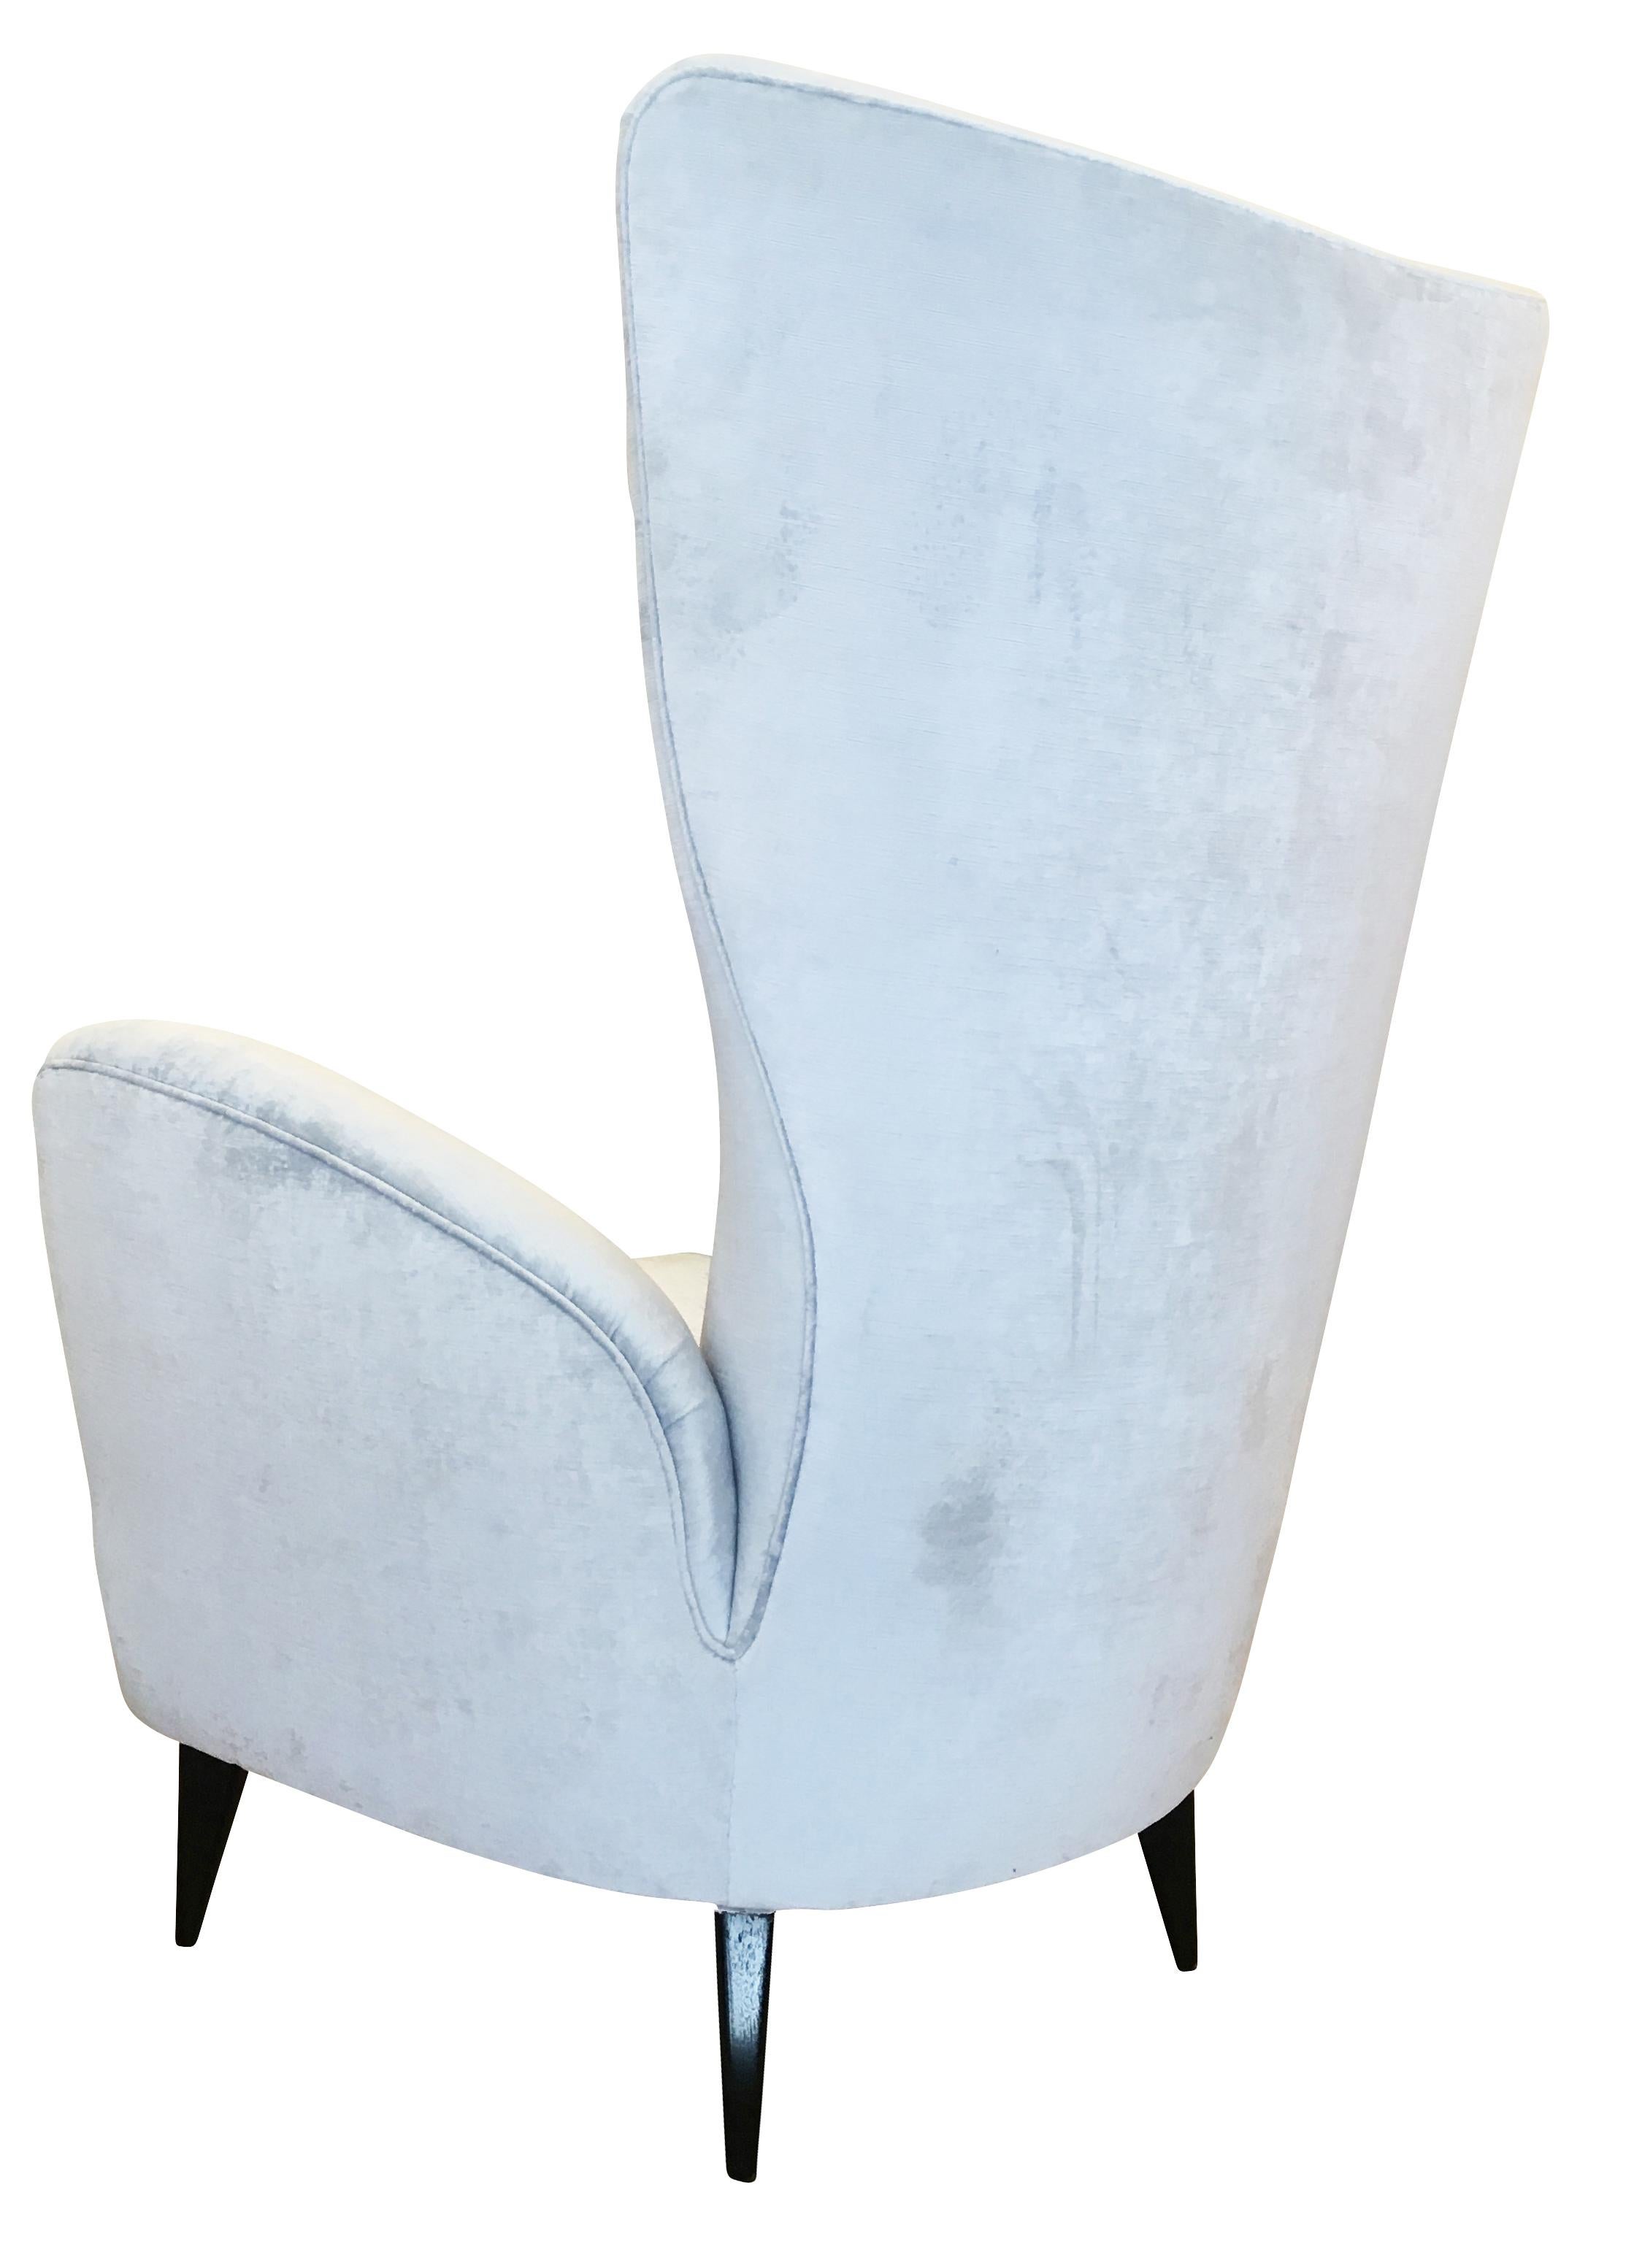 Mid-20th Century Pair of Italian Midcentury Lounge Chairs